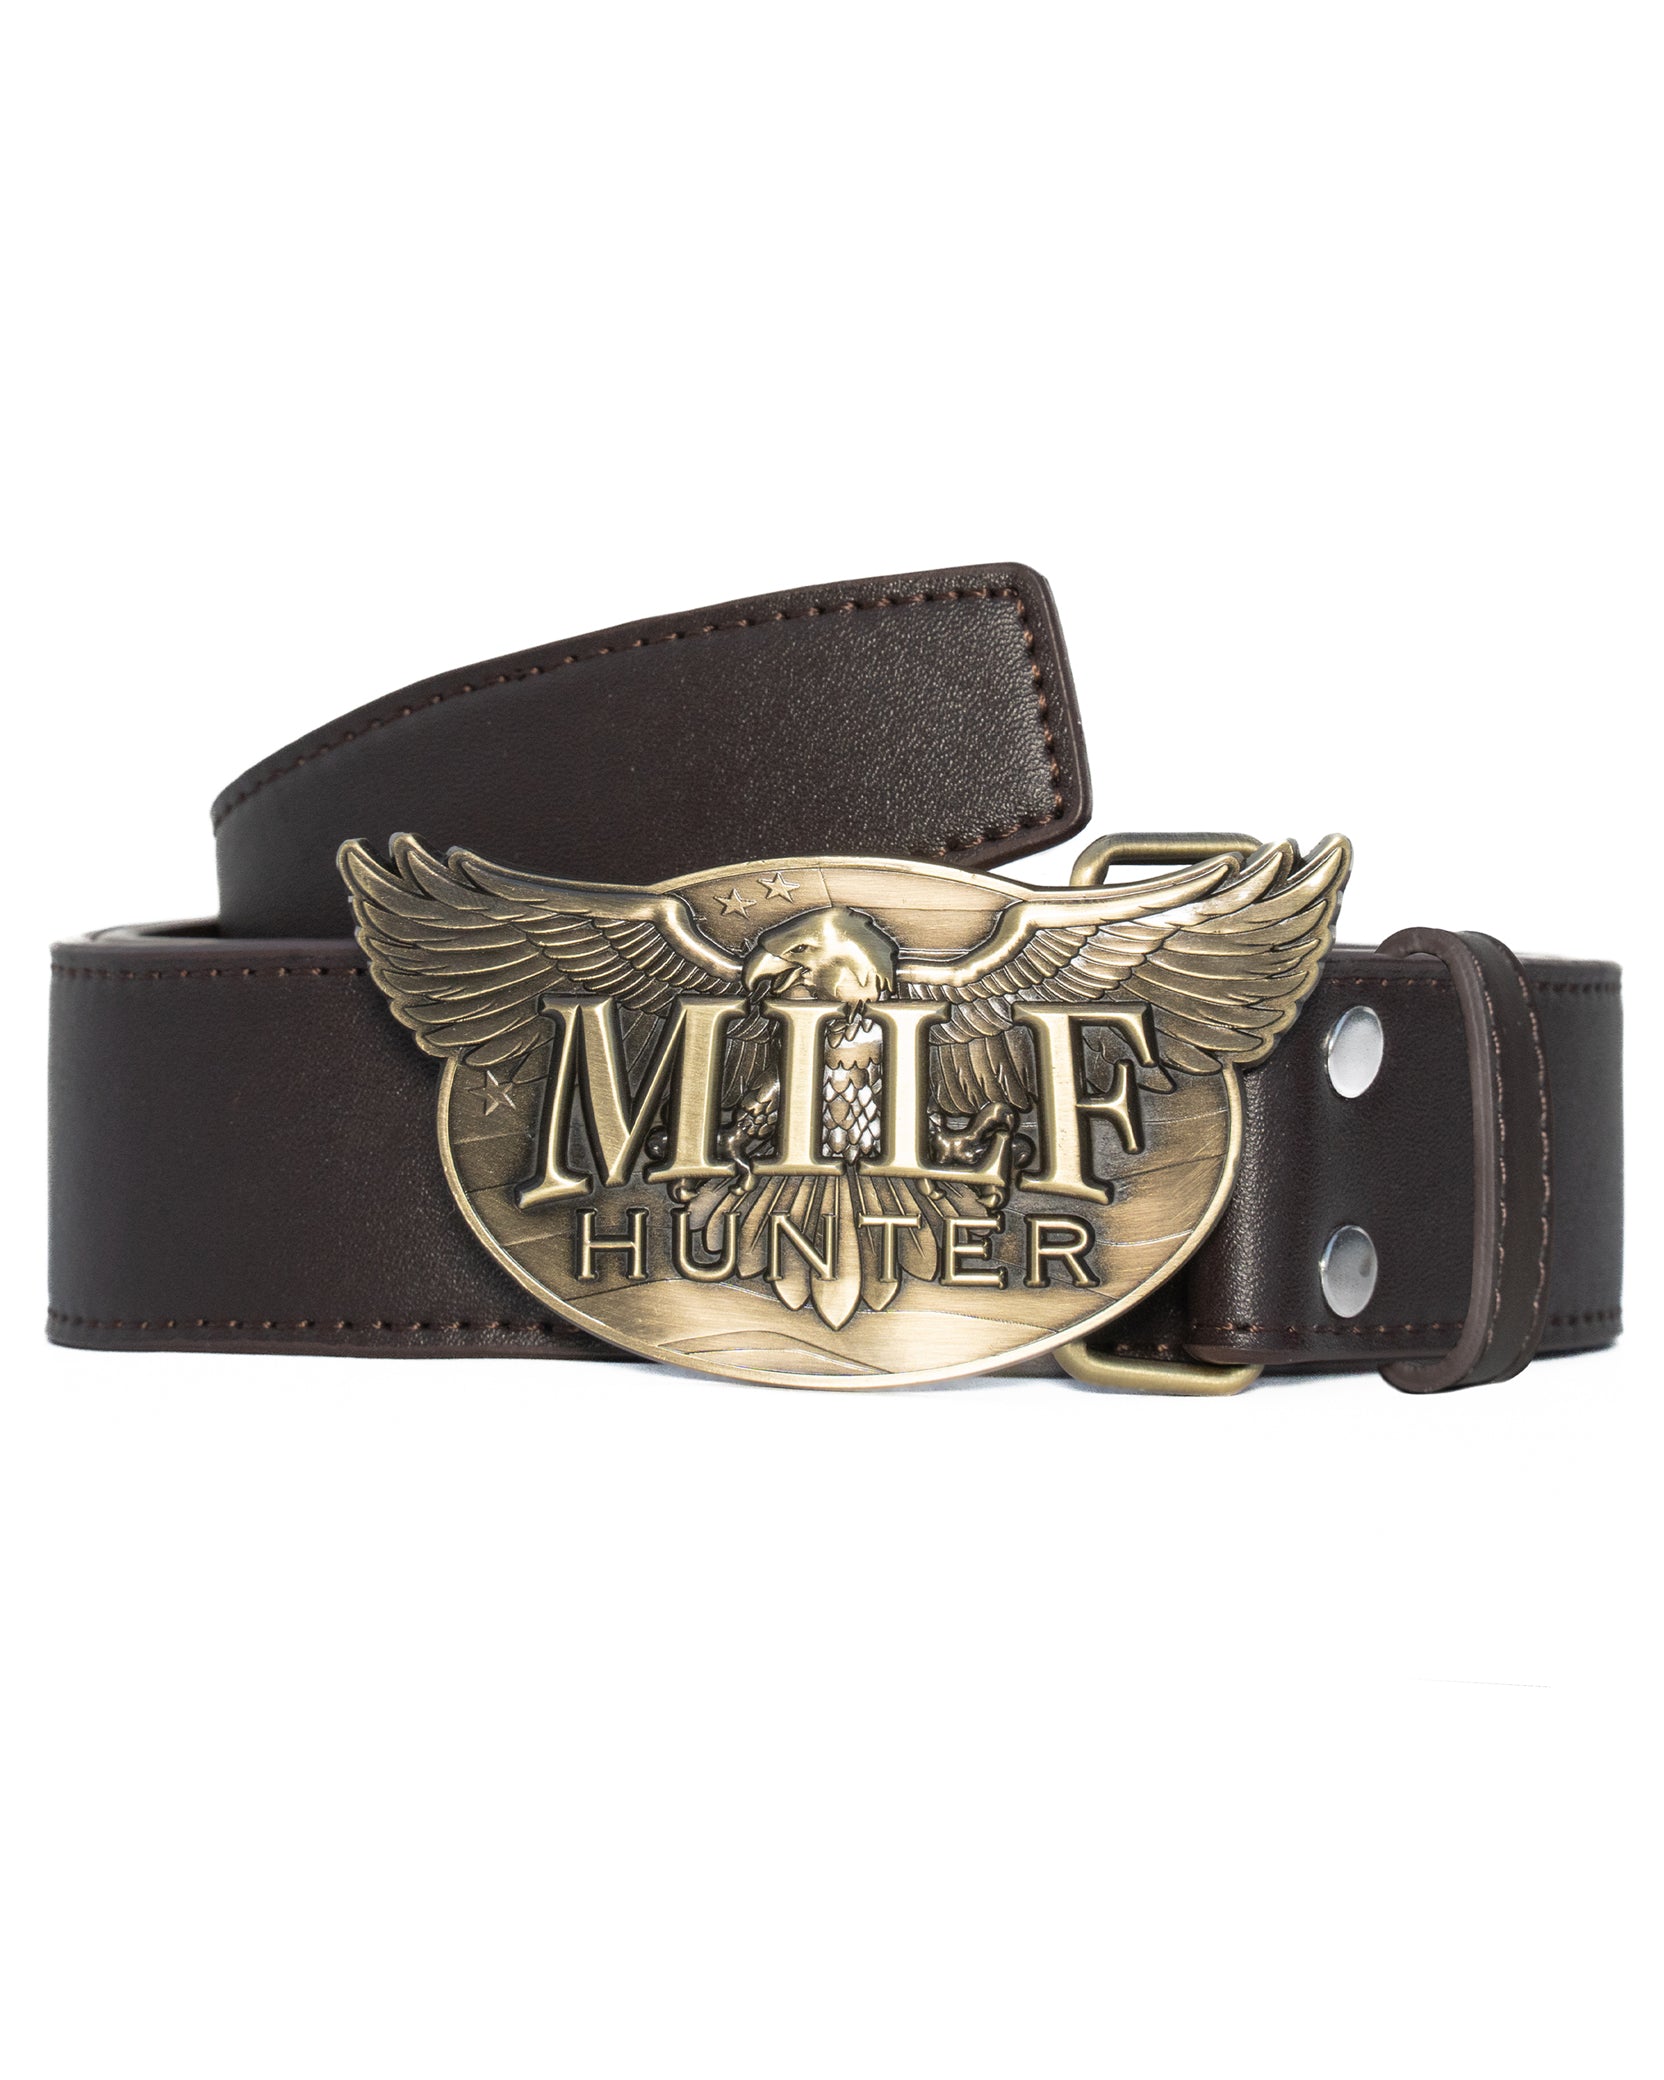 MILF Hunter Leather Belt - Brown / Bronze